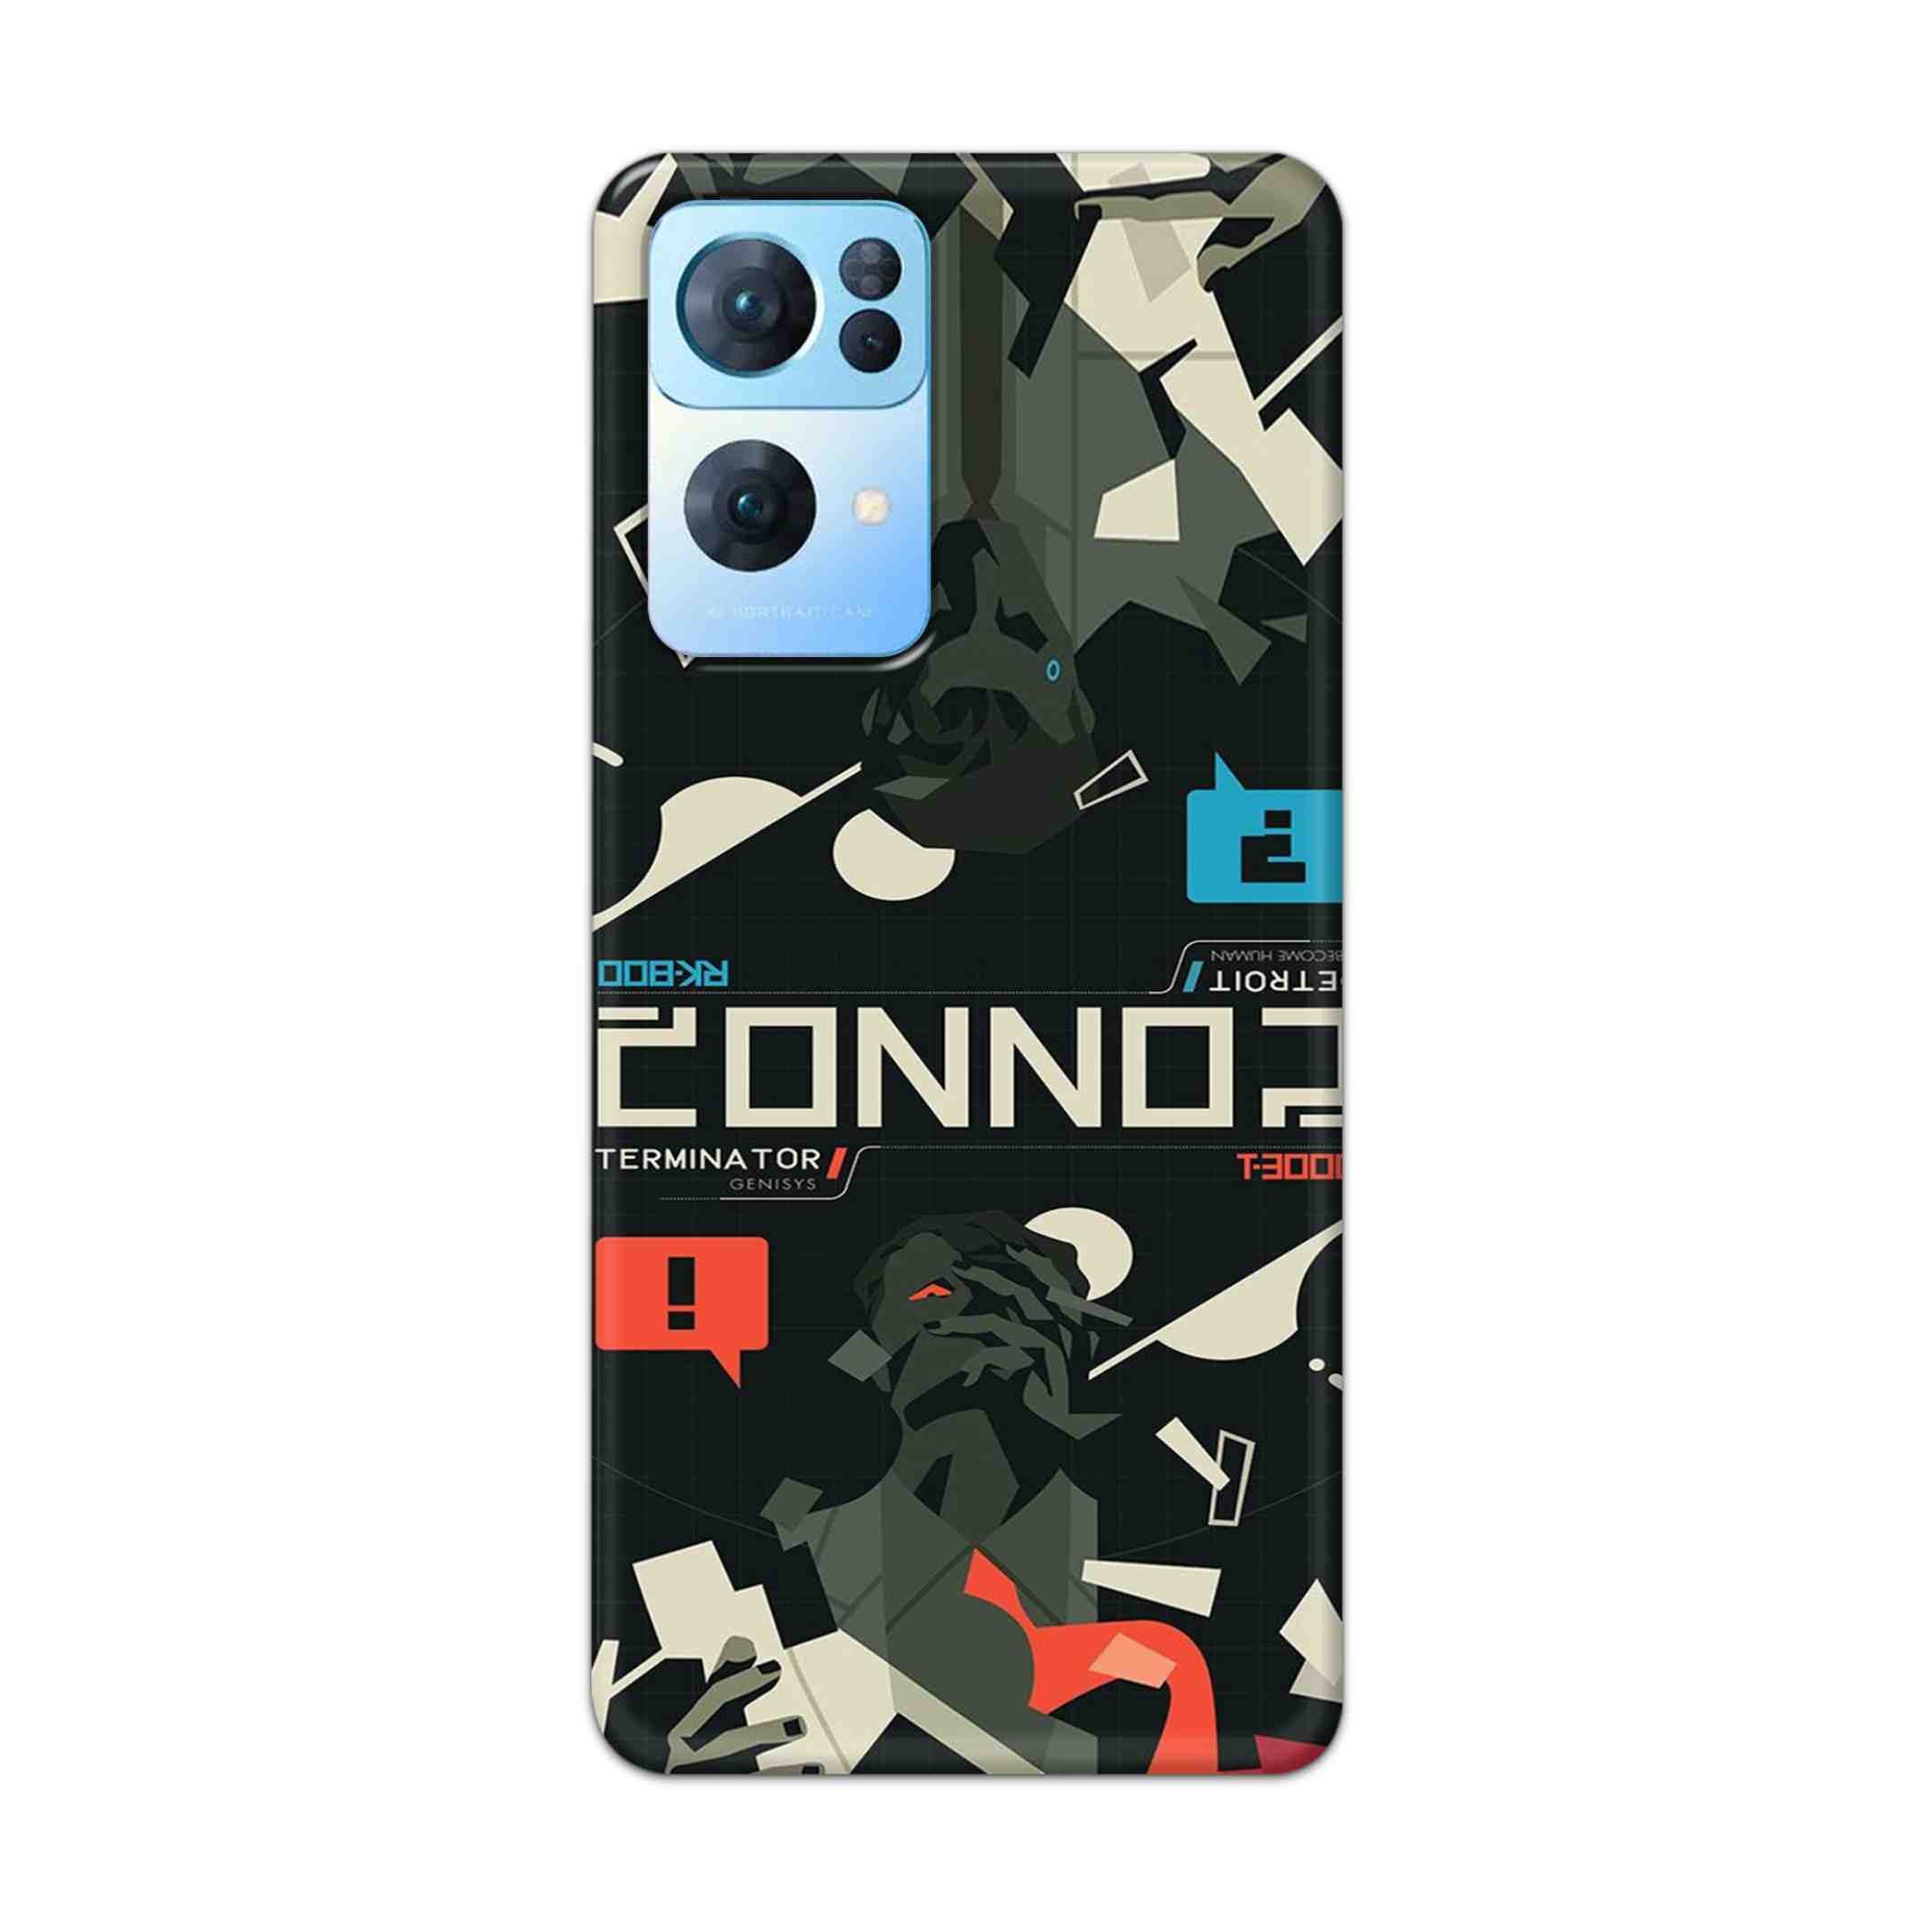 Buy Terminator Hard Back Mobile Phone Case Cover For Oppo Reno 7 Pro Online